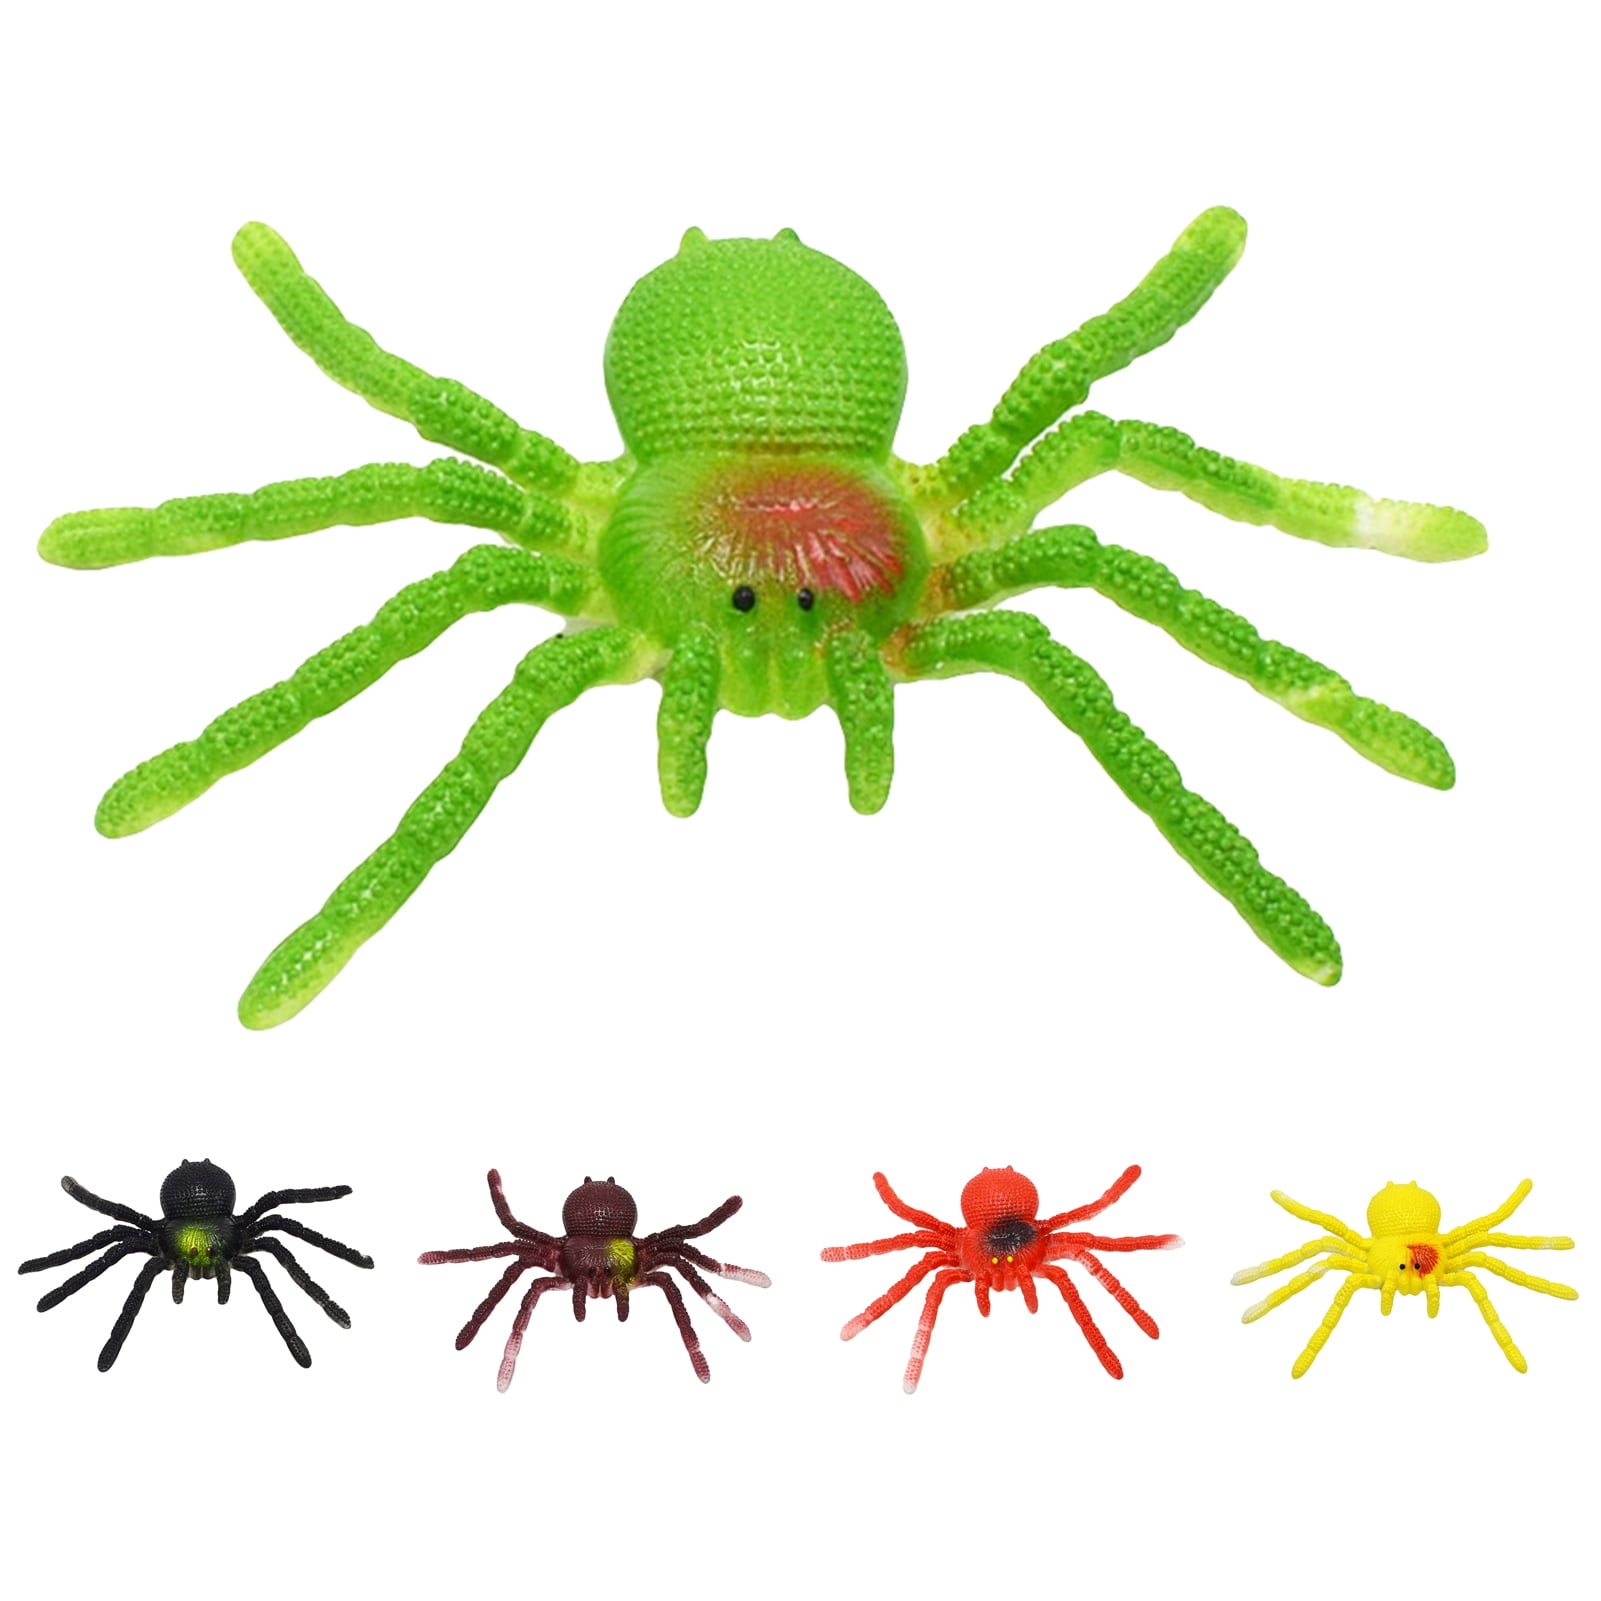 SpiderJuice 1Pc Multipurpose Self Adhesive Reusable Animal Shaped